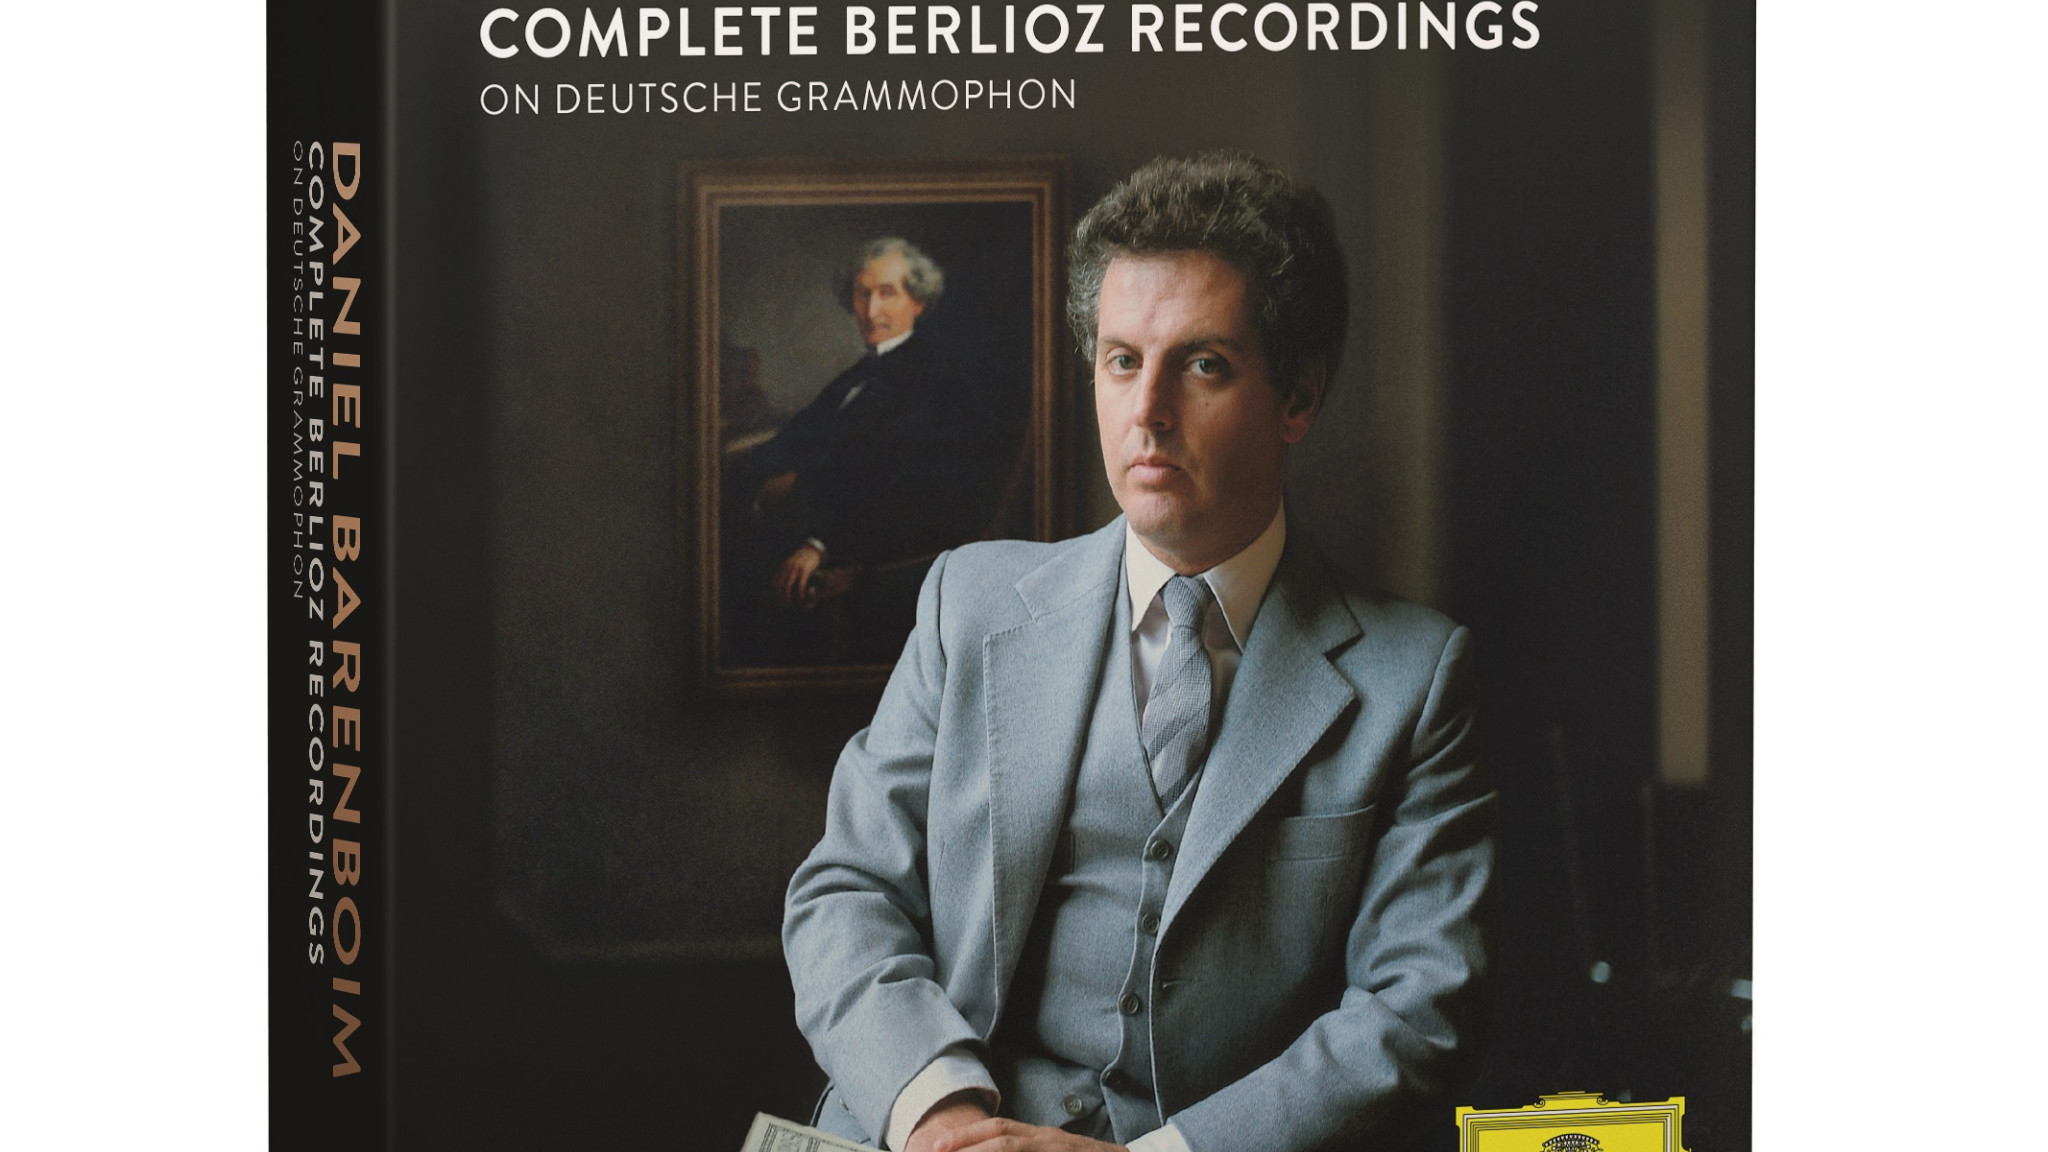 Daniel Barenboim - Complete Berlioz Recordings on DG